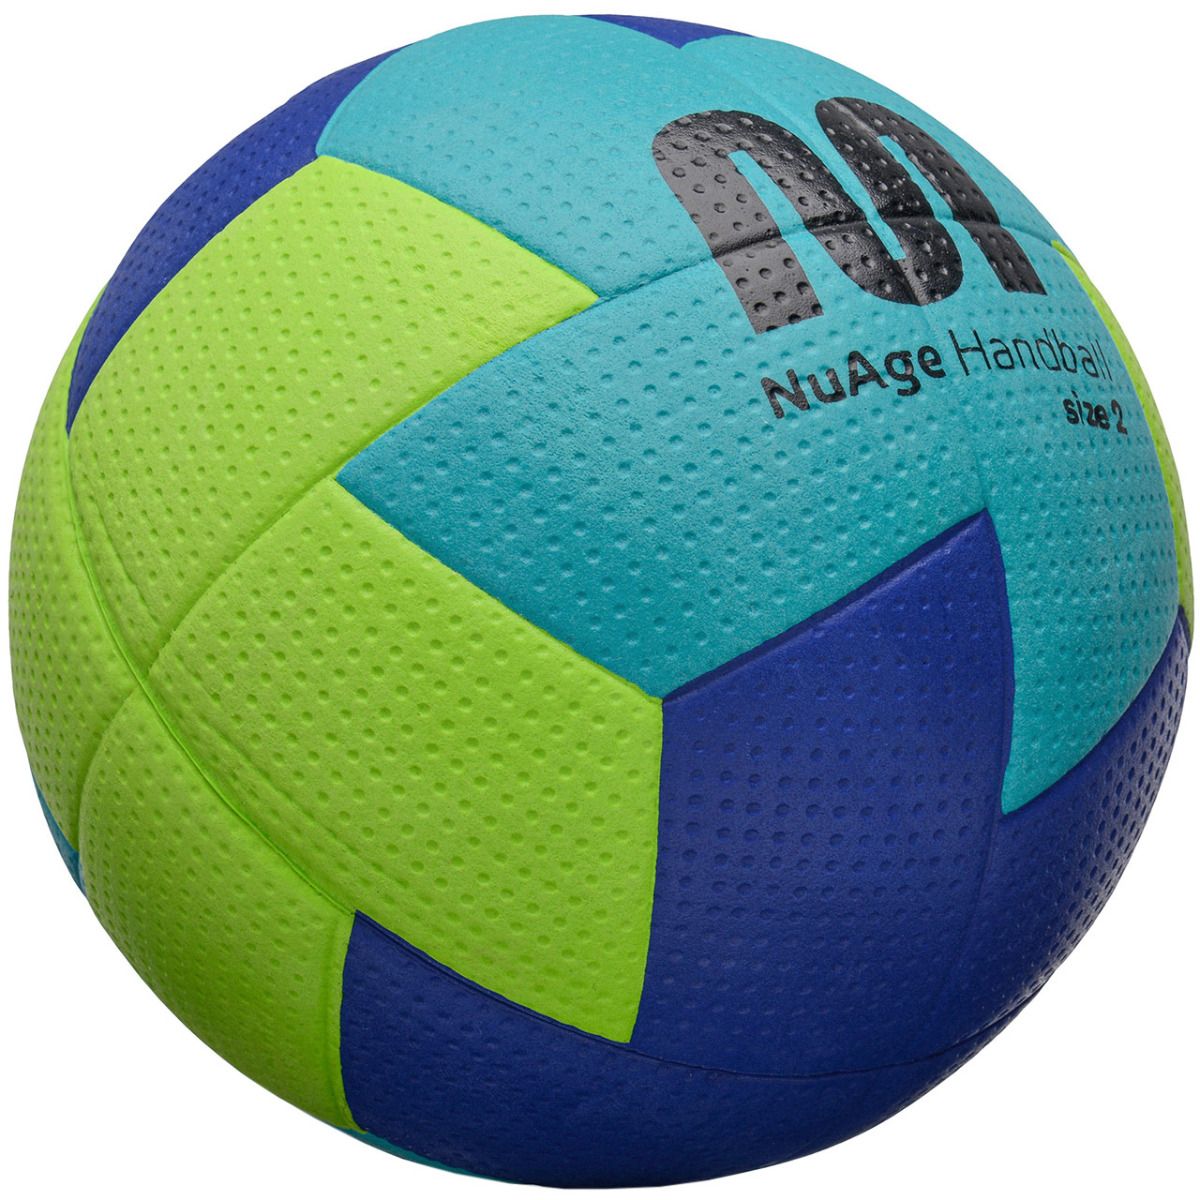 Meteor Damen Handball Nuage 2 16694